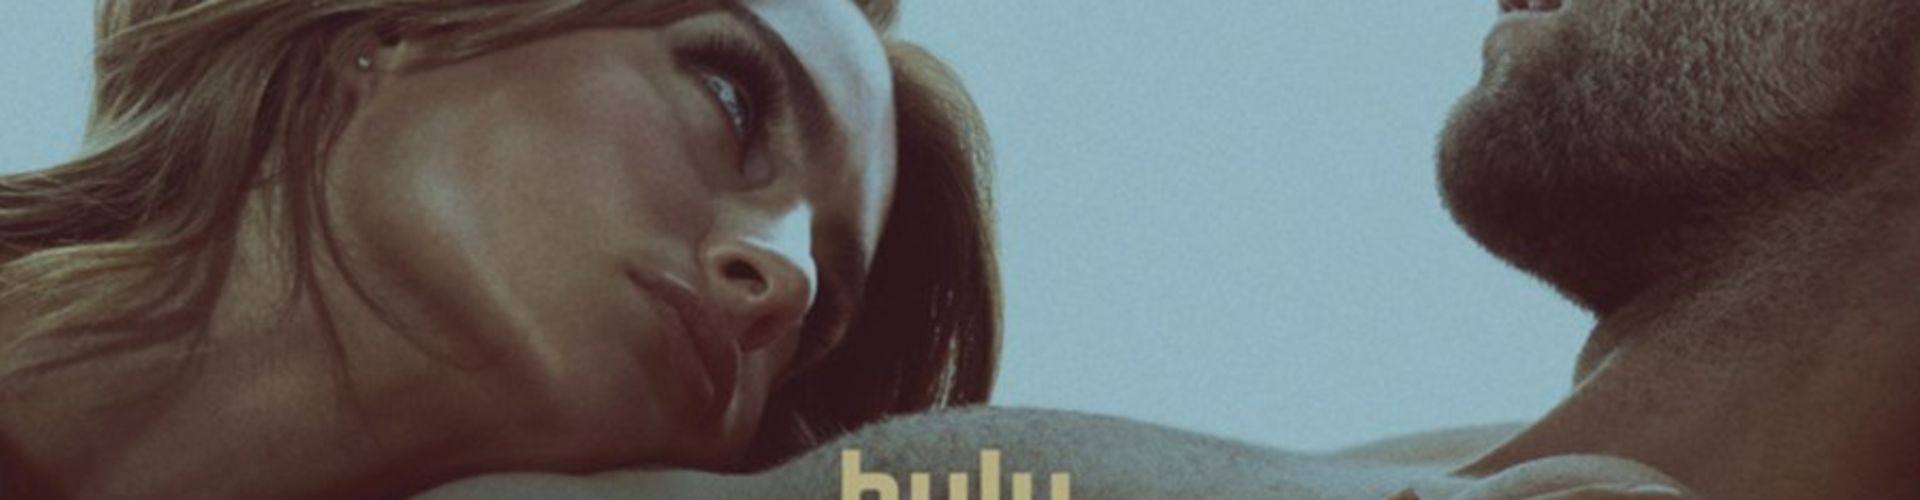 Hulu Drops Tell Me Lies Trailer